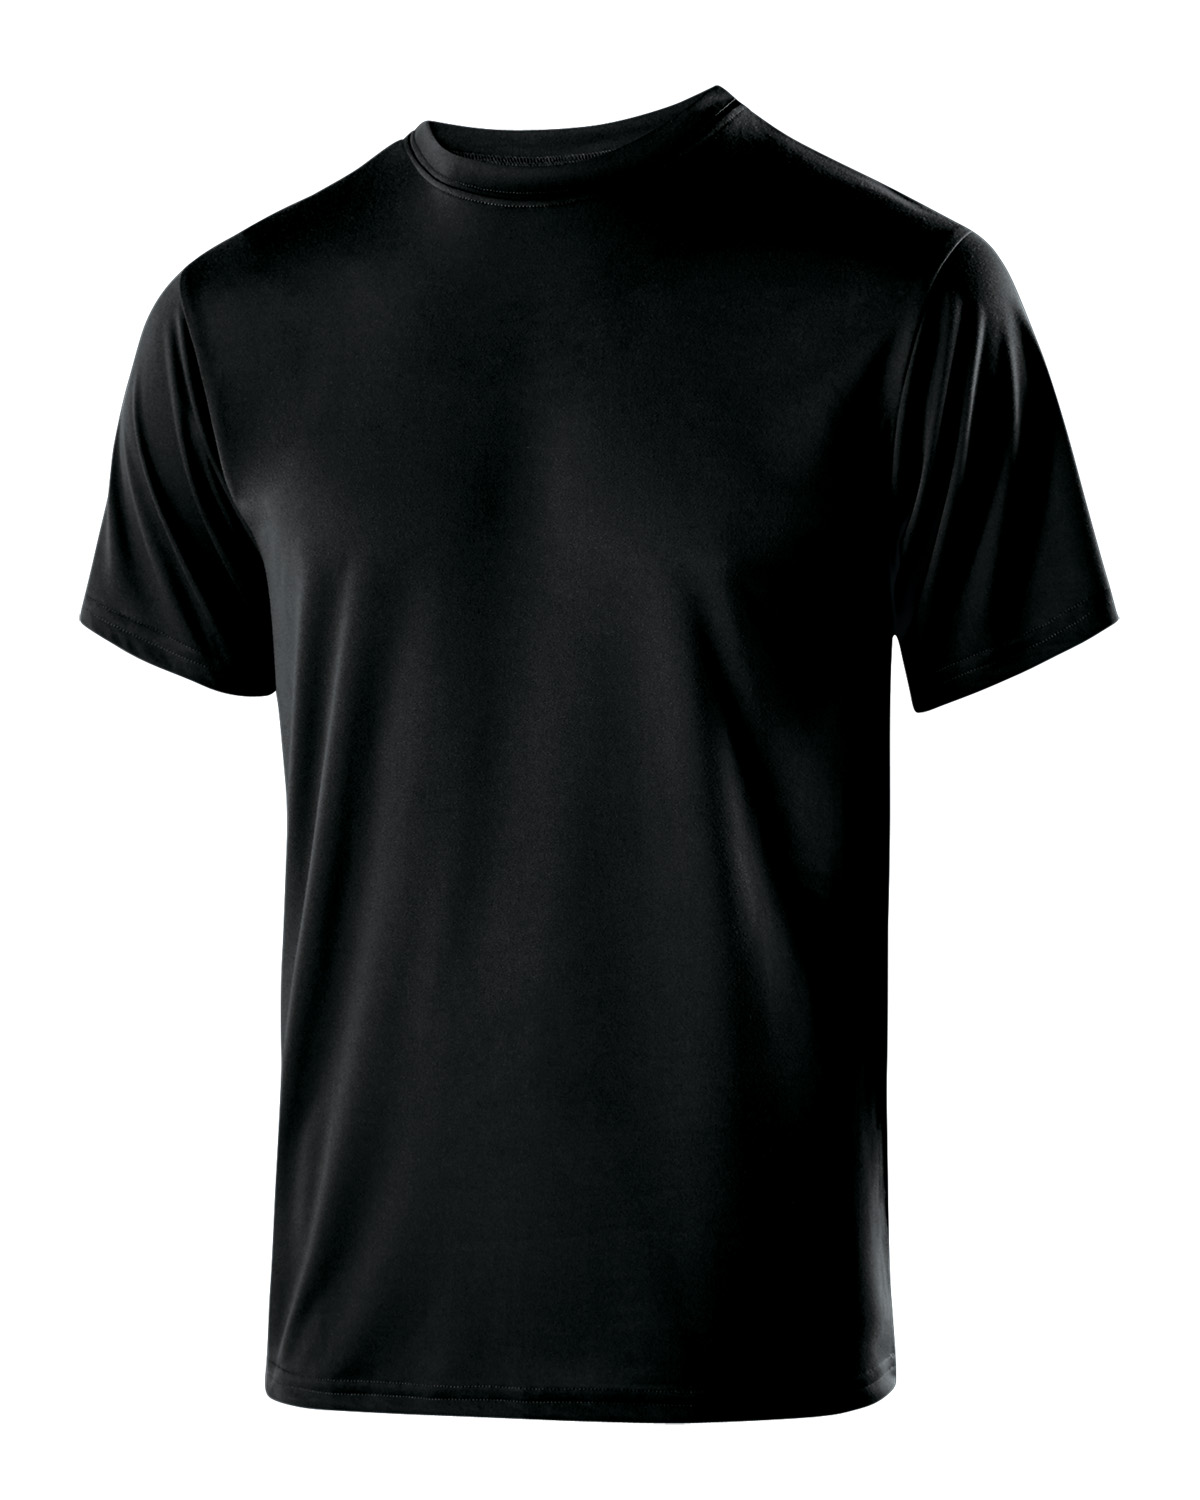 Holloway 222523 - Adult Polyester Short Sleeve Gauge Shirt $8.43 - T-Shirts